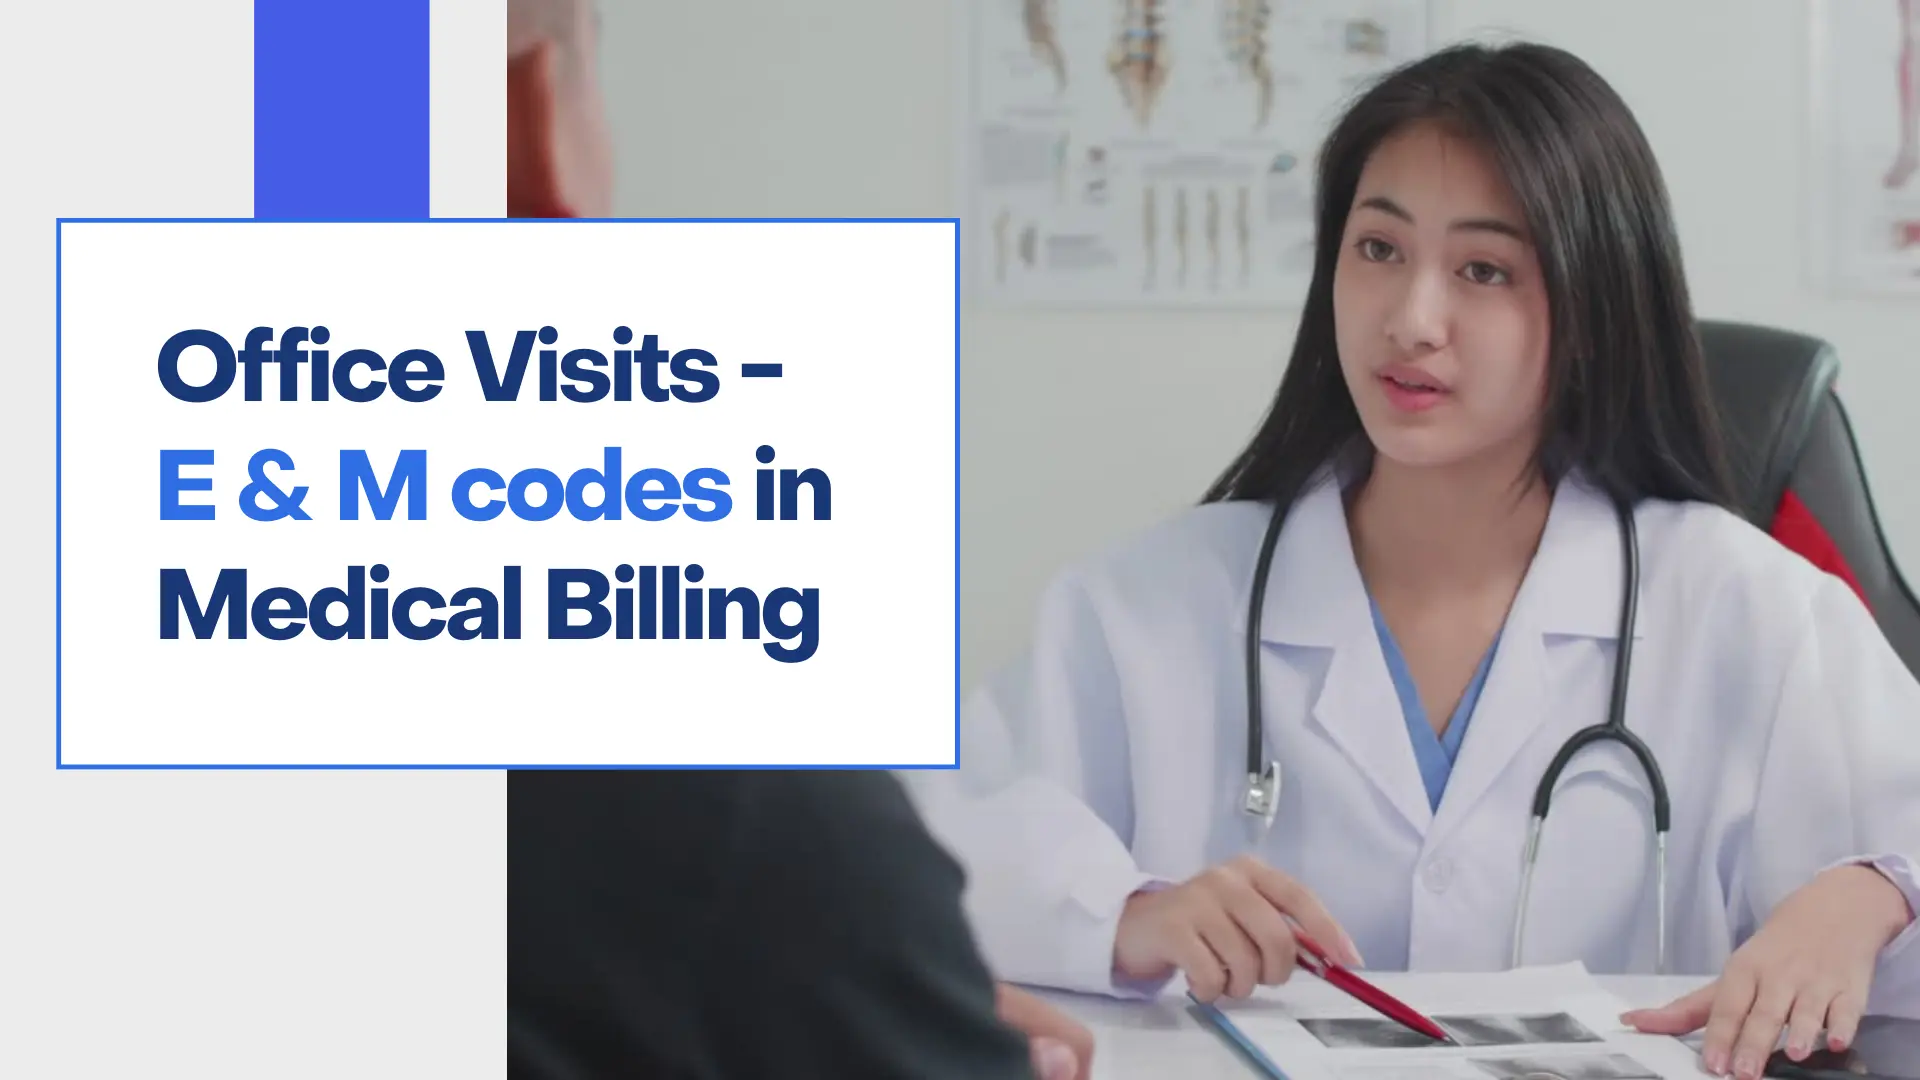 E&M codes in Medical Billing